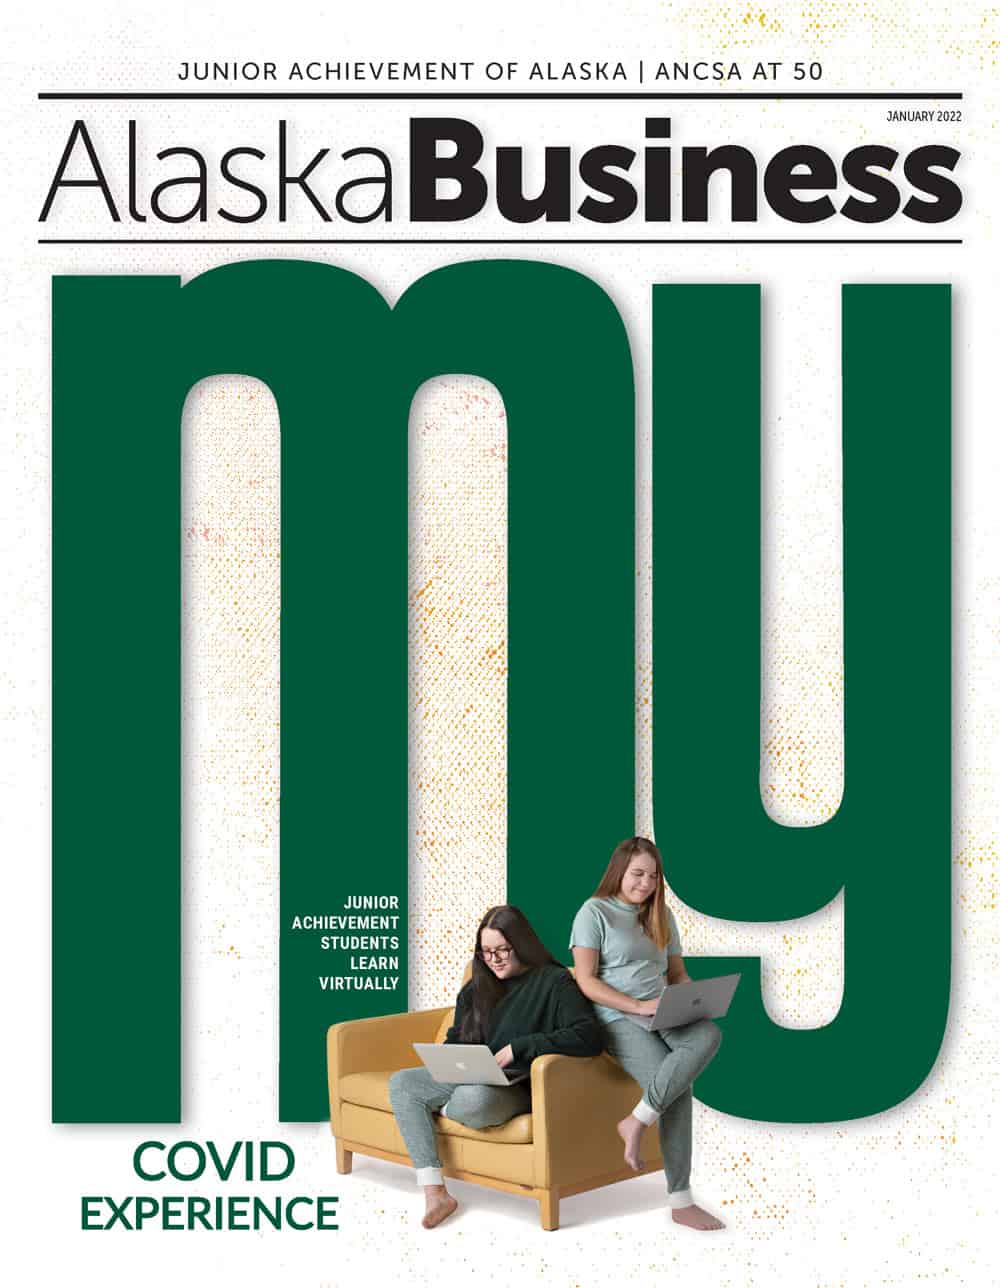 Alaska Business Magazine January 2022 cover